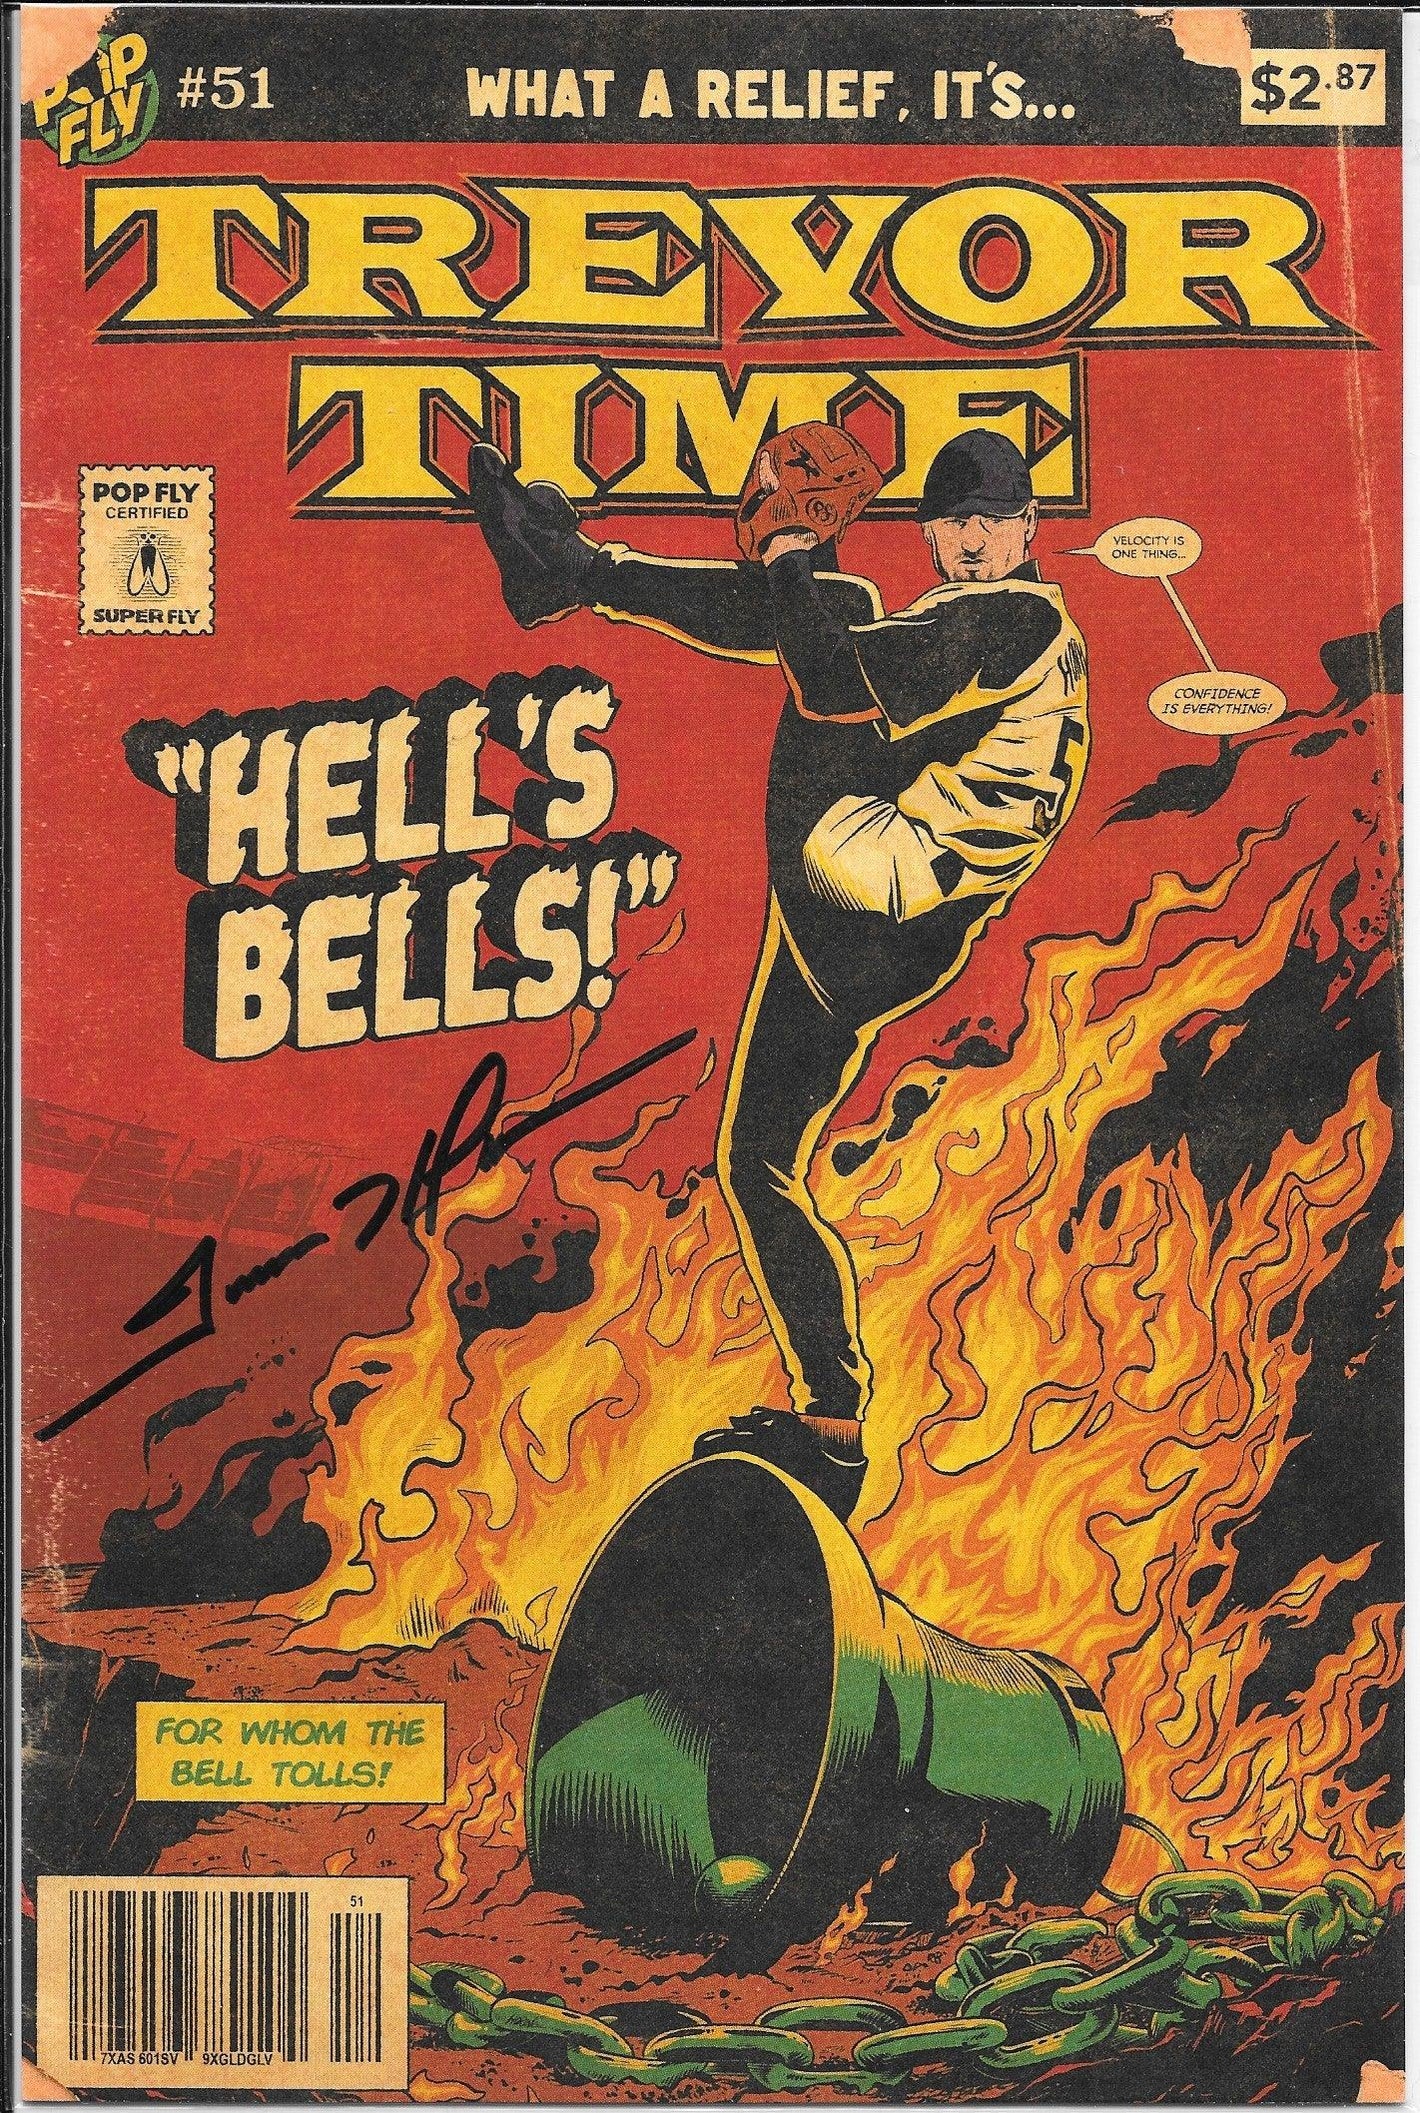 Trevor Hoffman "Hell's Bells" Pop Fly Pop Shop Print #69 – Signed by Trevor Hoffman & Daniel Jacob Horine - PastPros